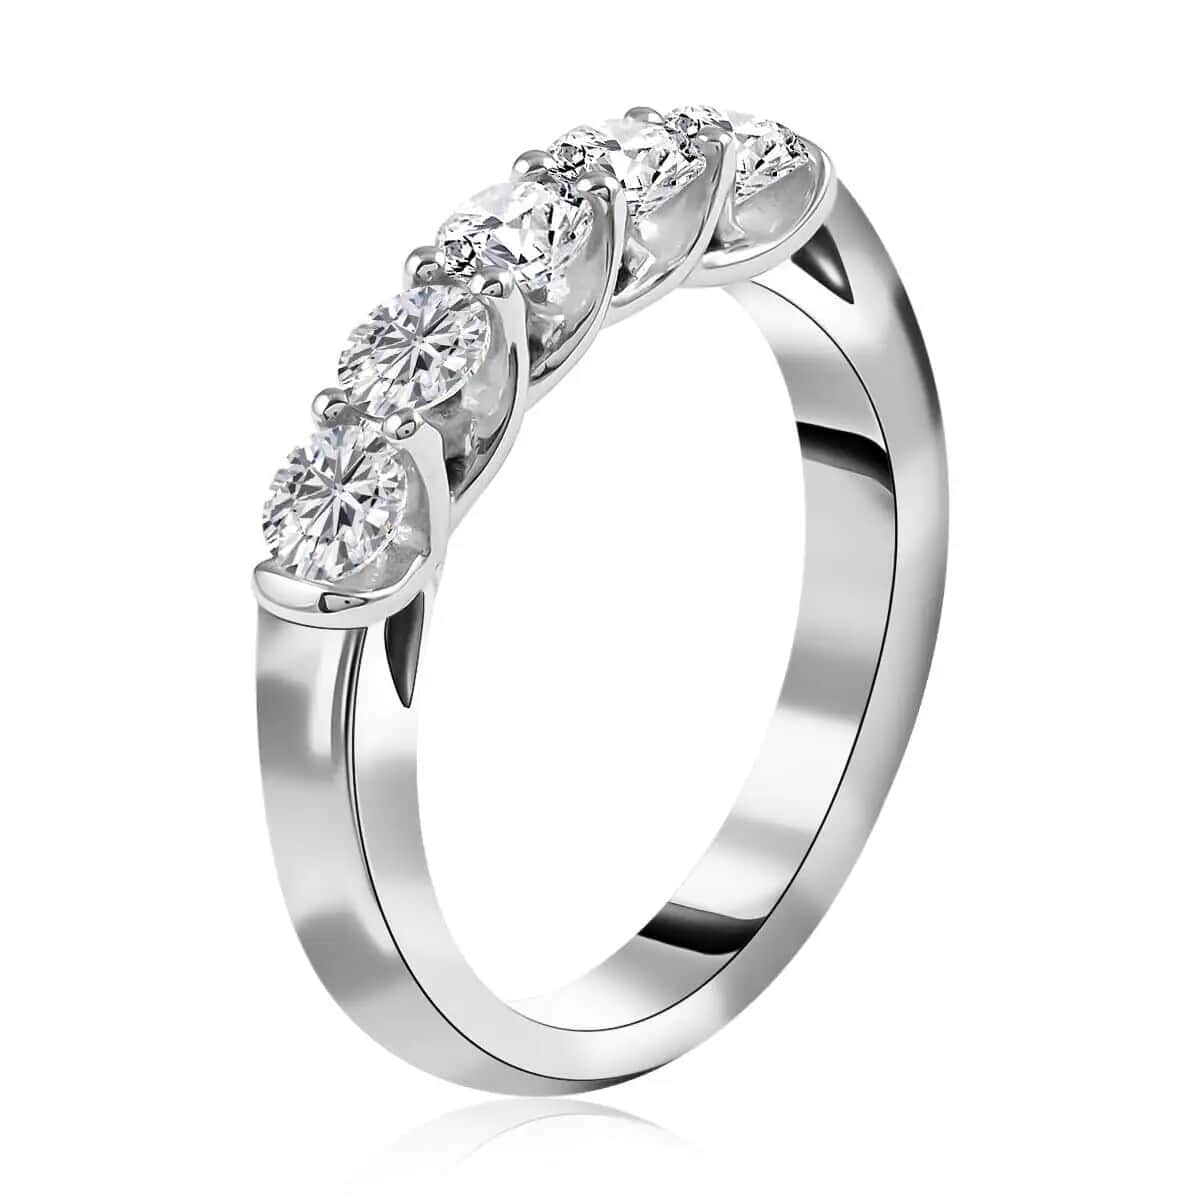 Modani 950 Platinum Natural Diamond G VVS2 Ring (Size 10.0) 8 Grams 1.00 ctw image number 5